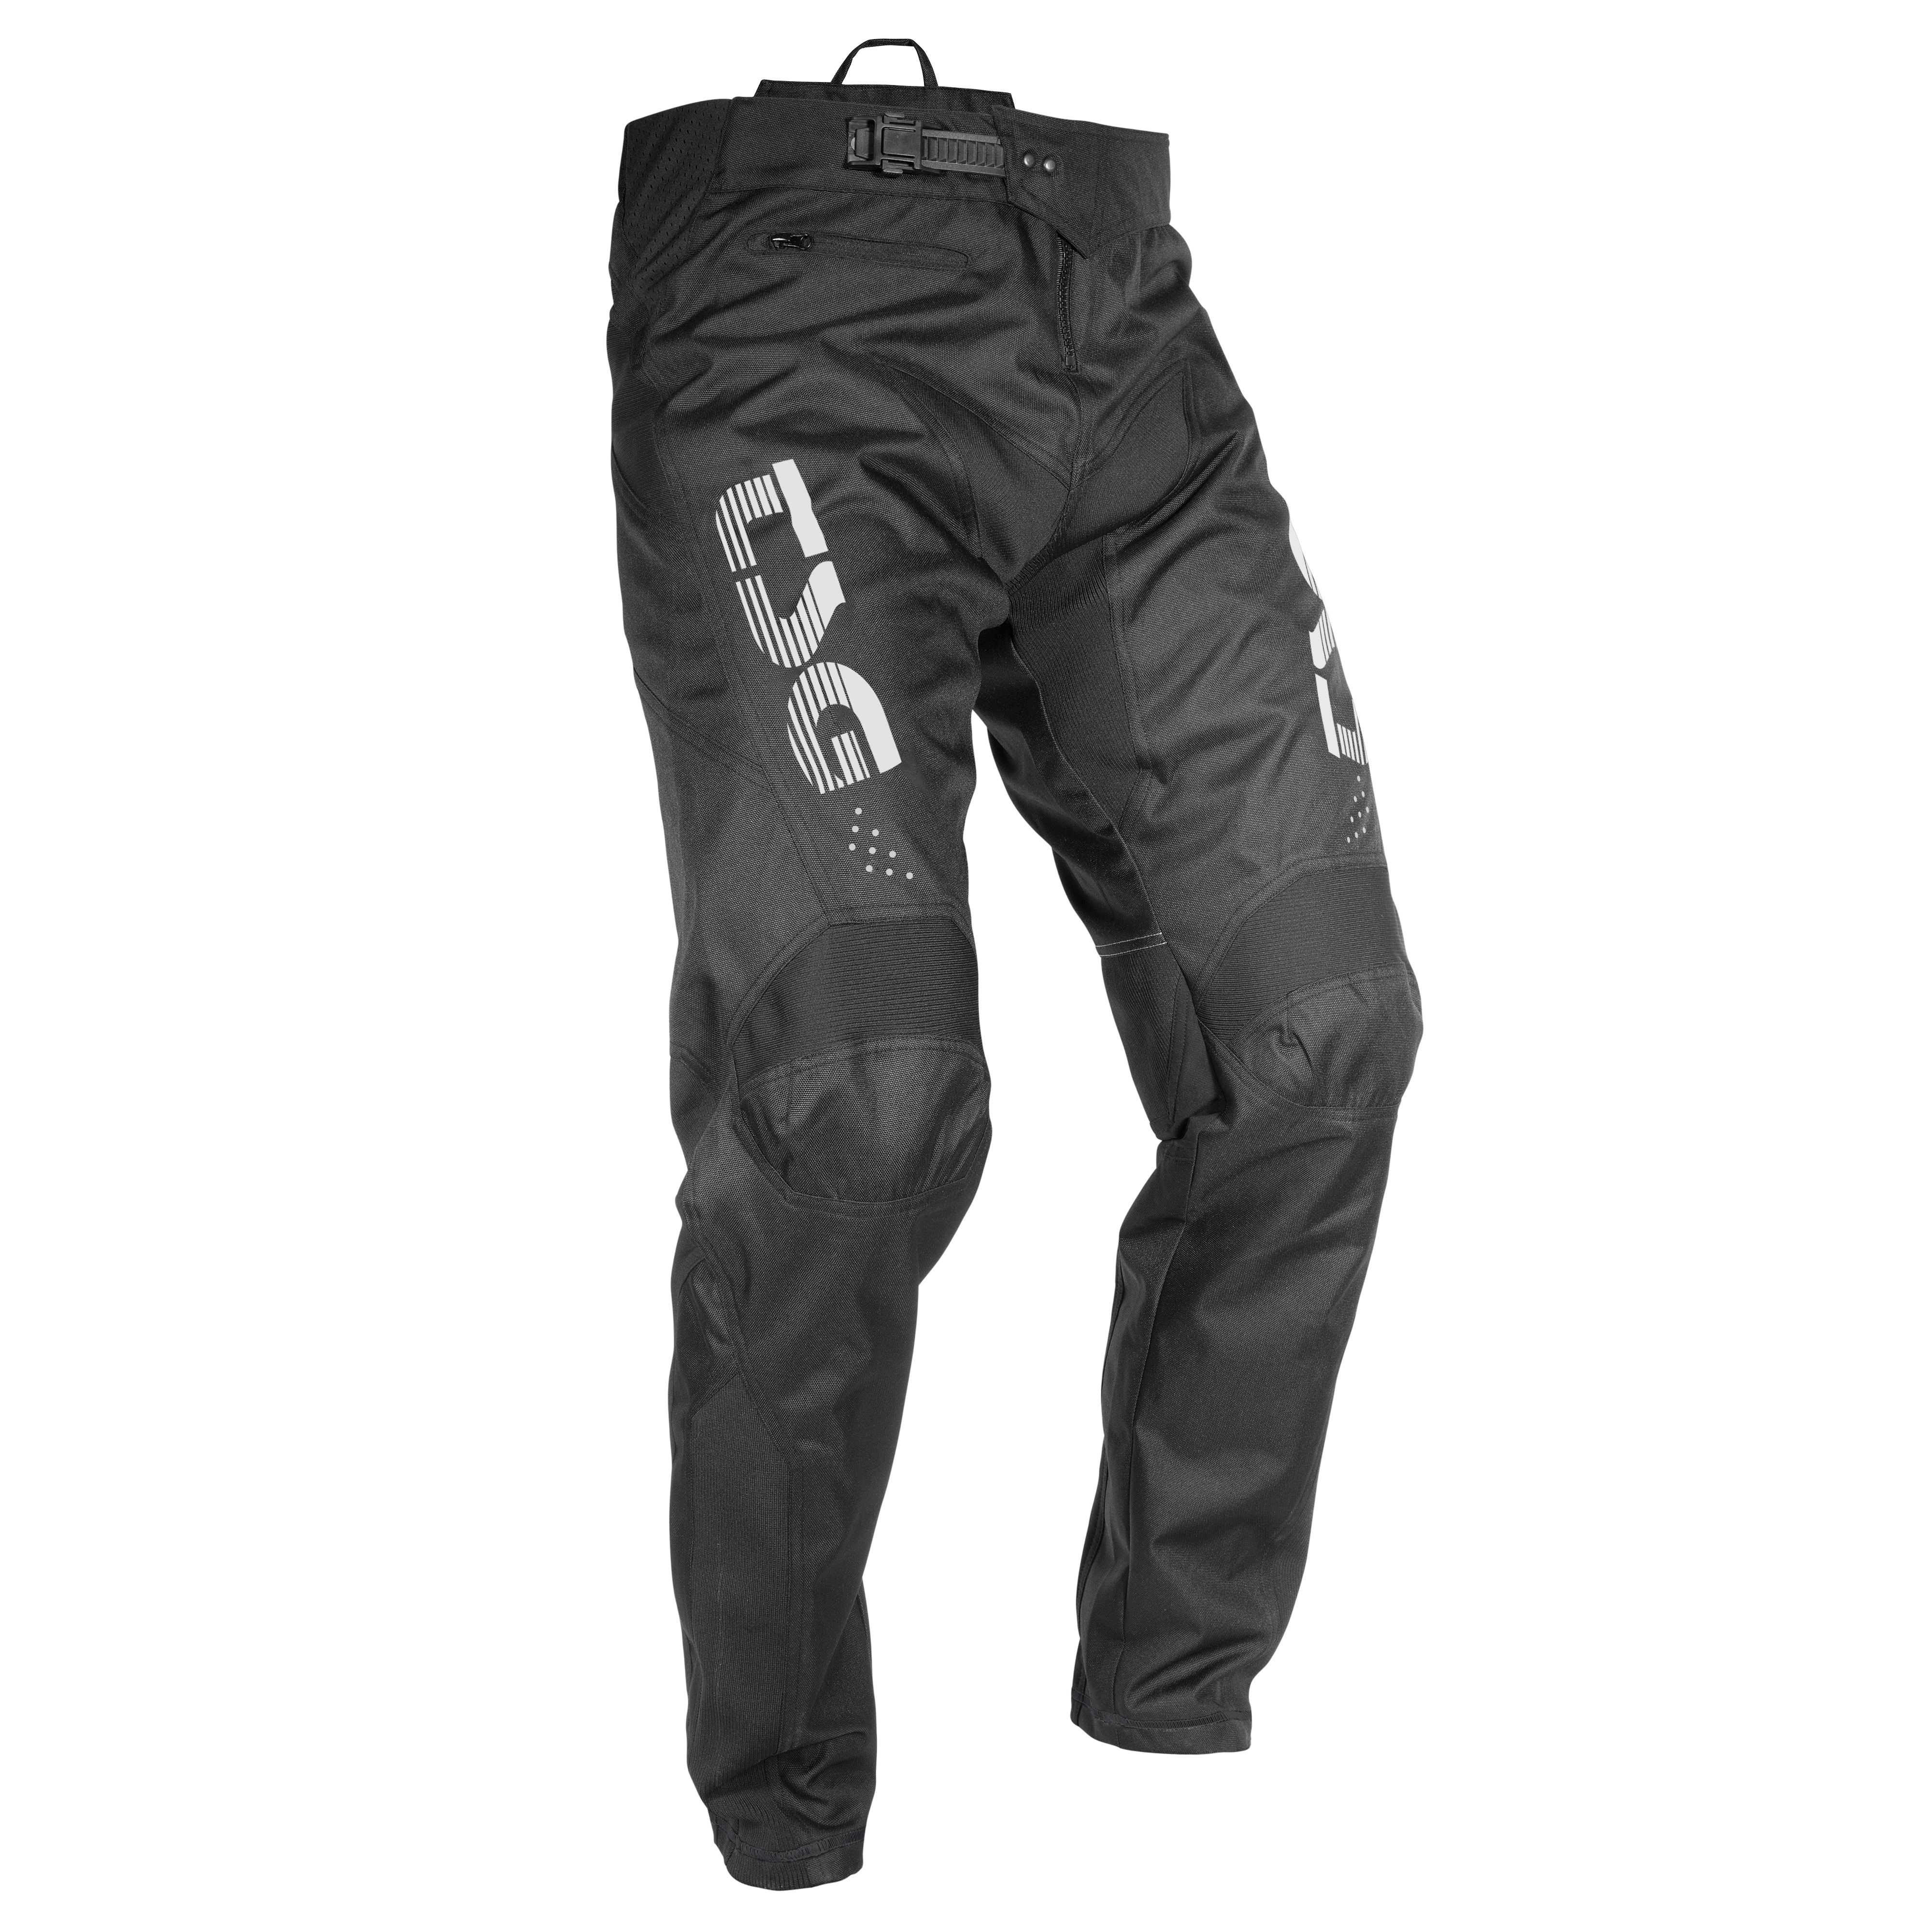 Kalhoty TSG Trailz DH černé, L